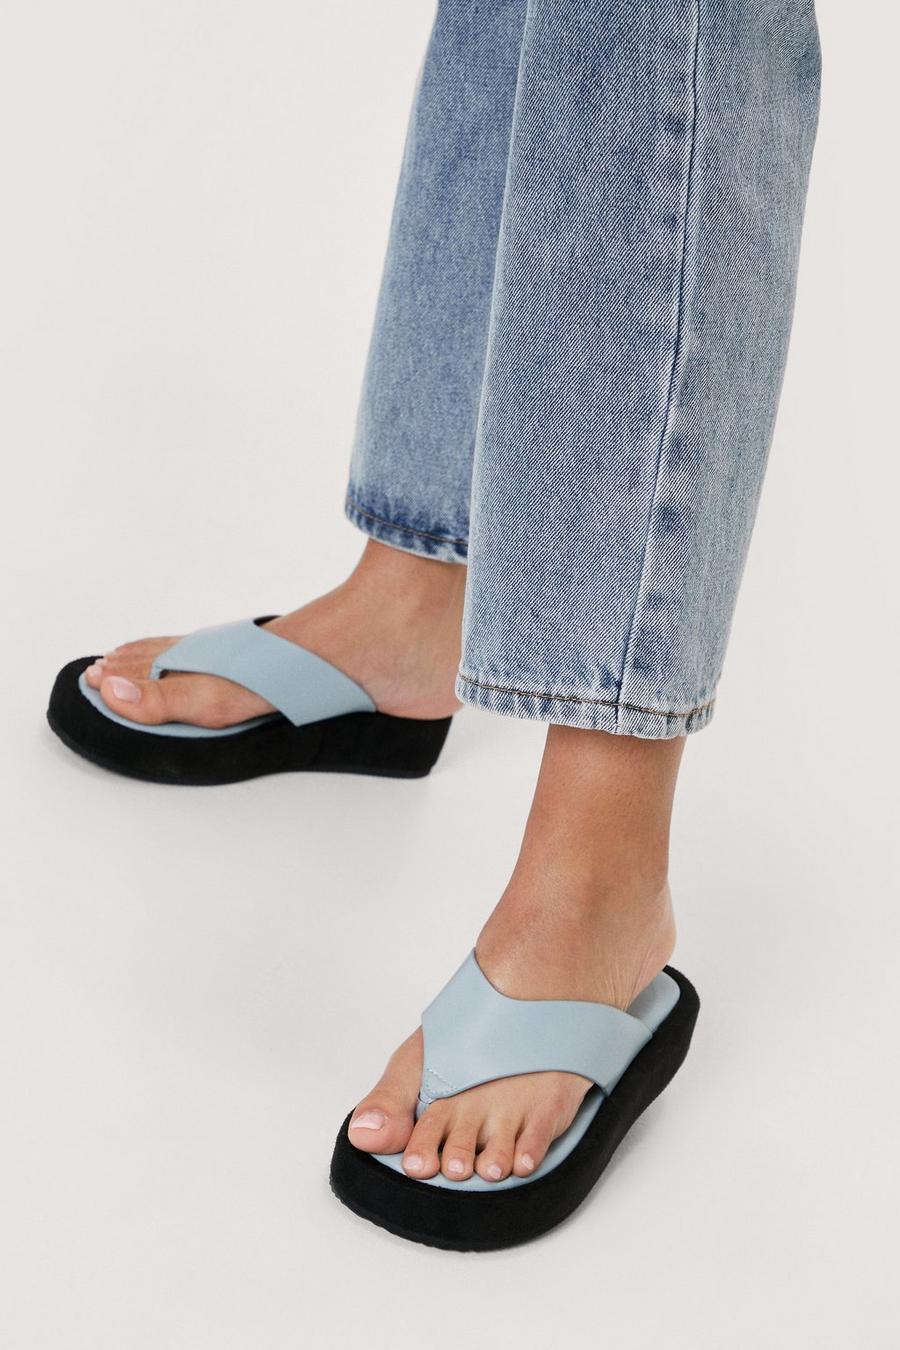 Faux Leather Toe Thong Flatform Sandals